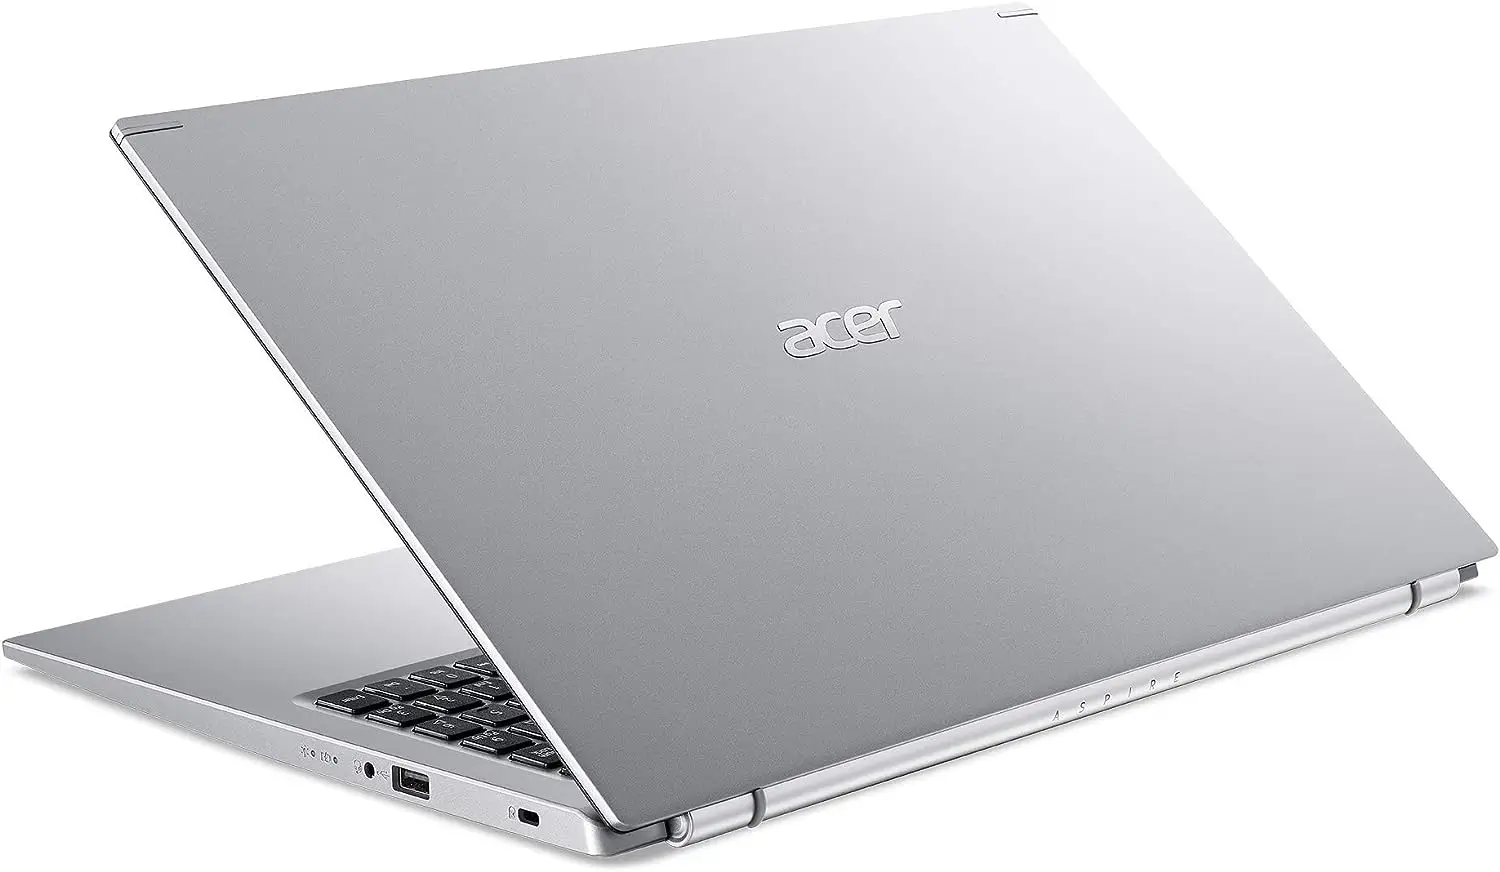 Acer Aspire 5 A515-56-347N